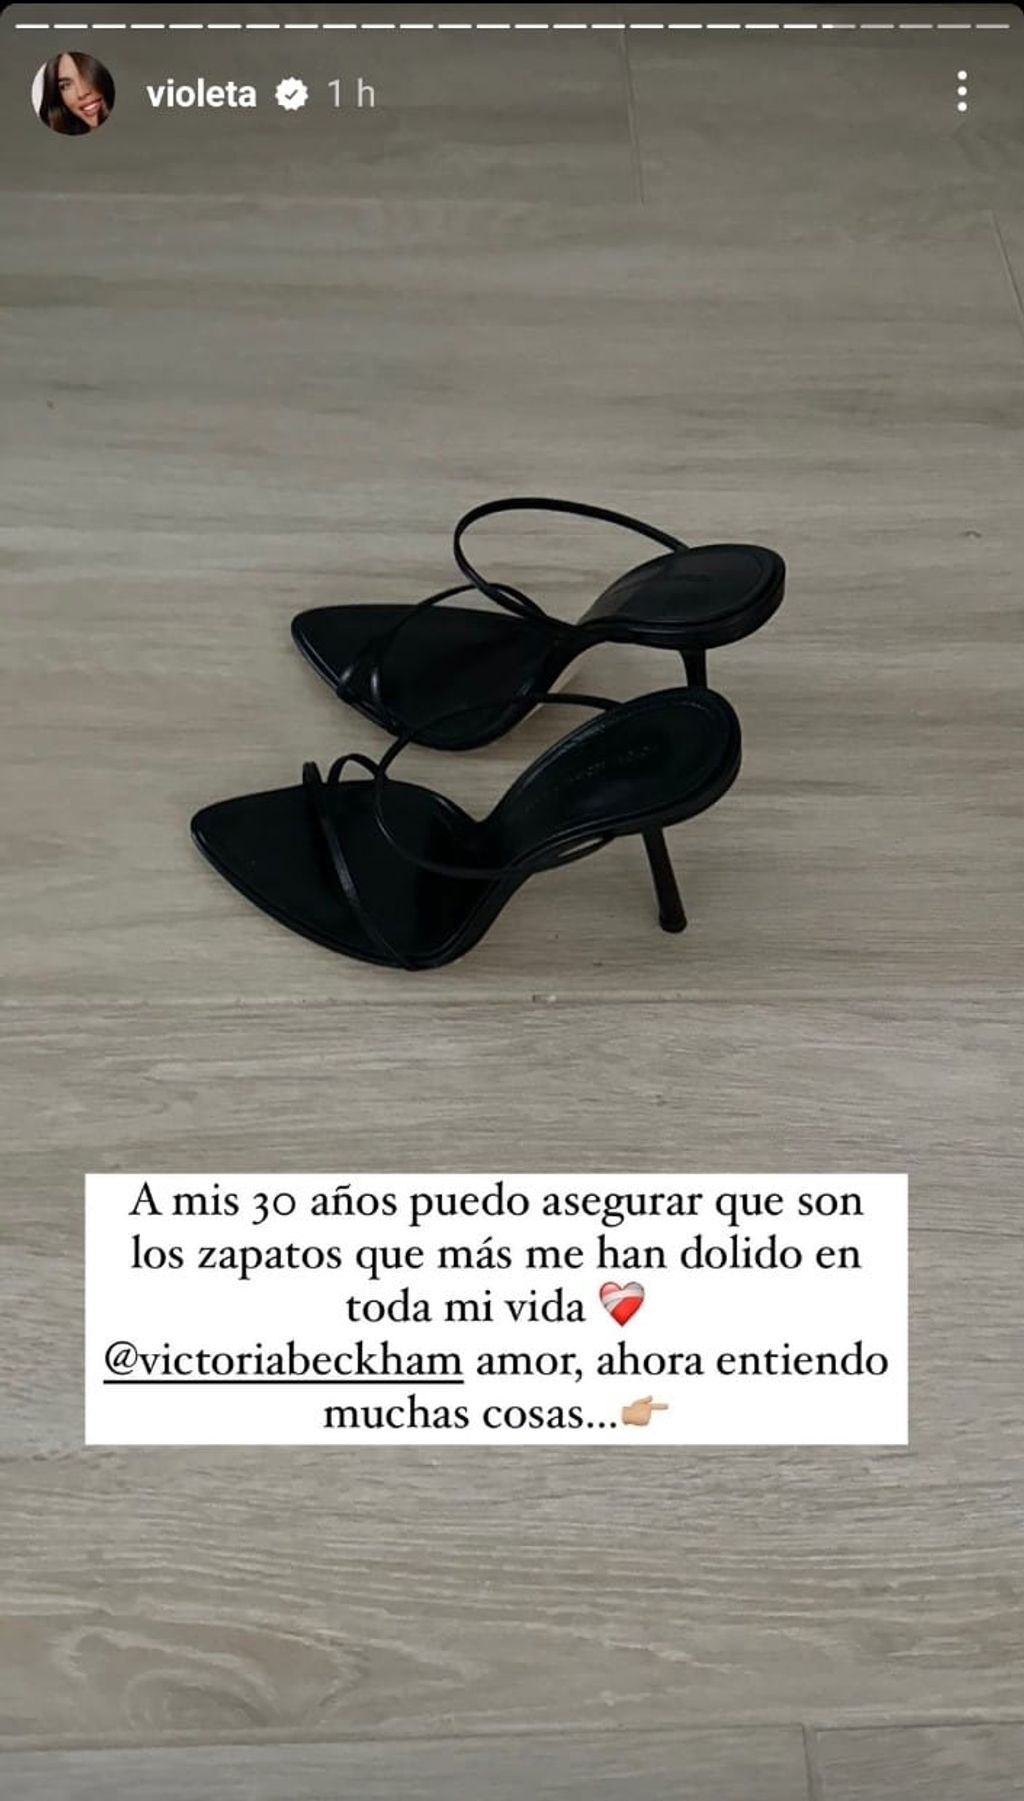 Story Violeta Mangriñán sobre los zapatos de Victoria Beckham para Mango